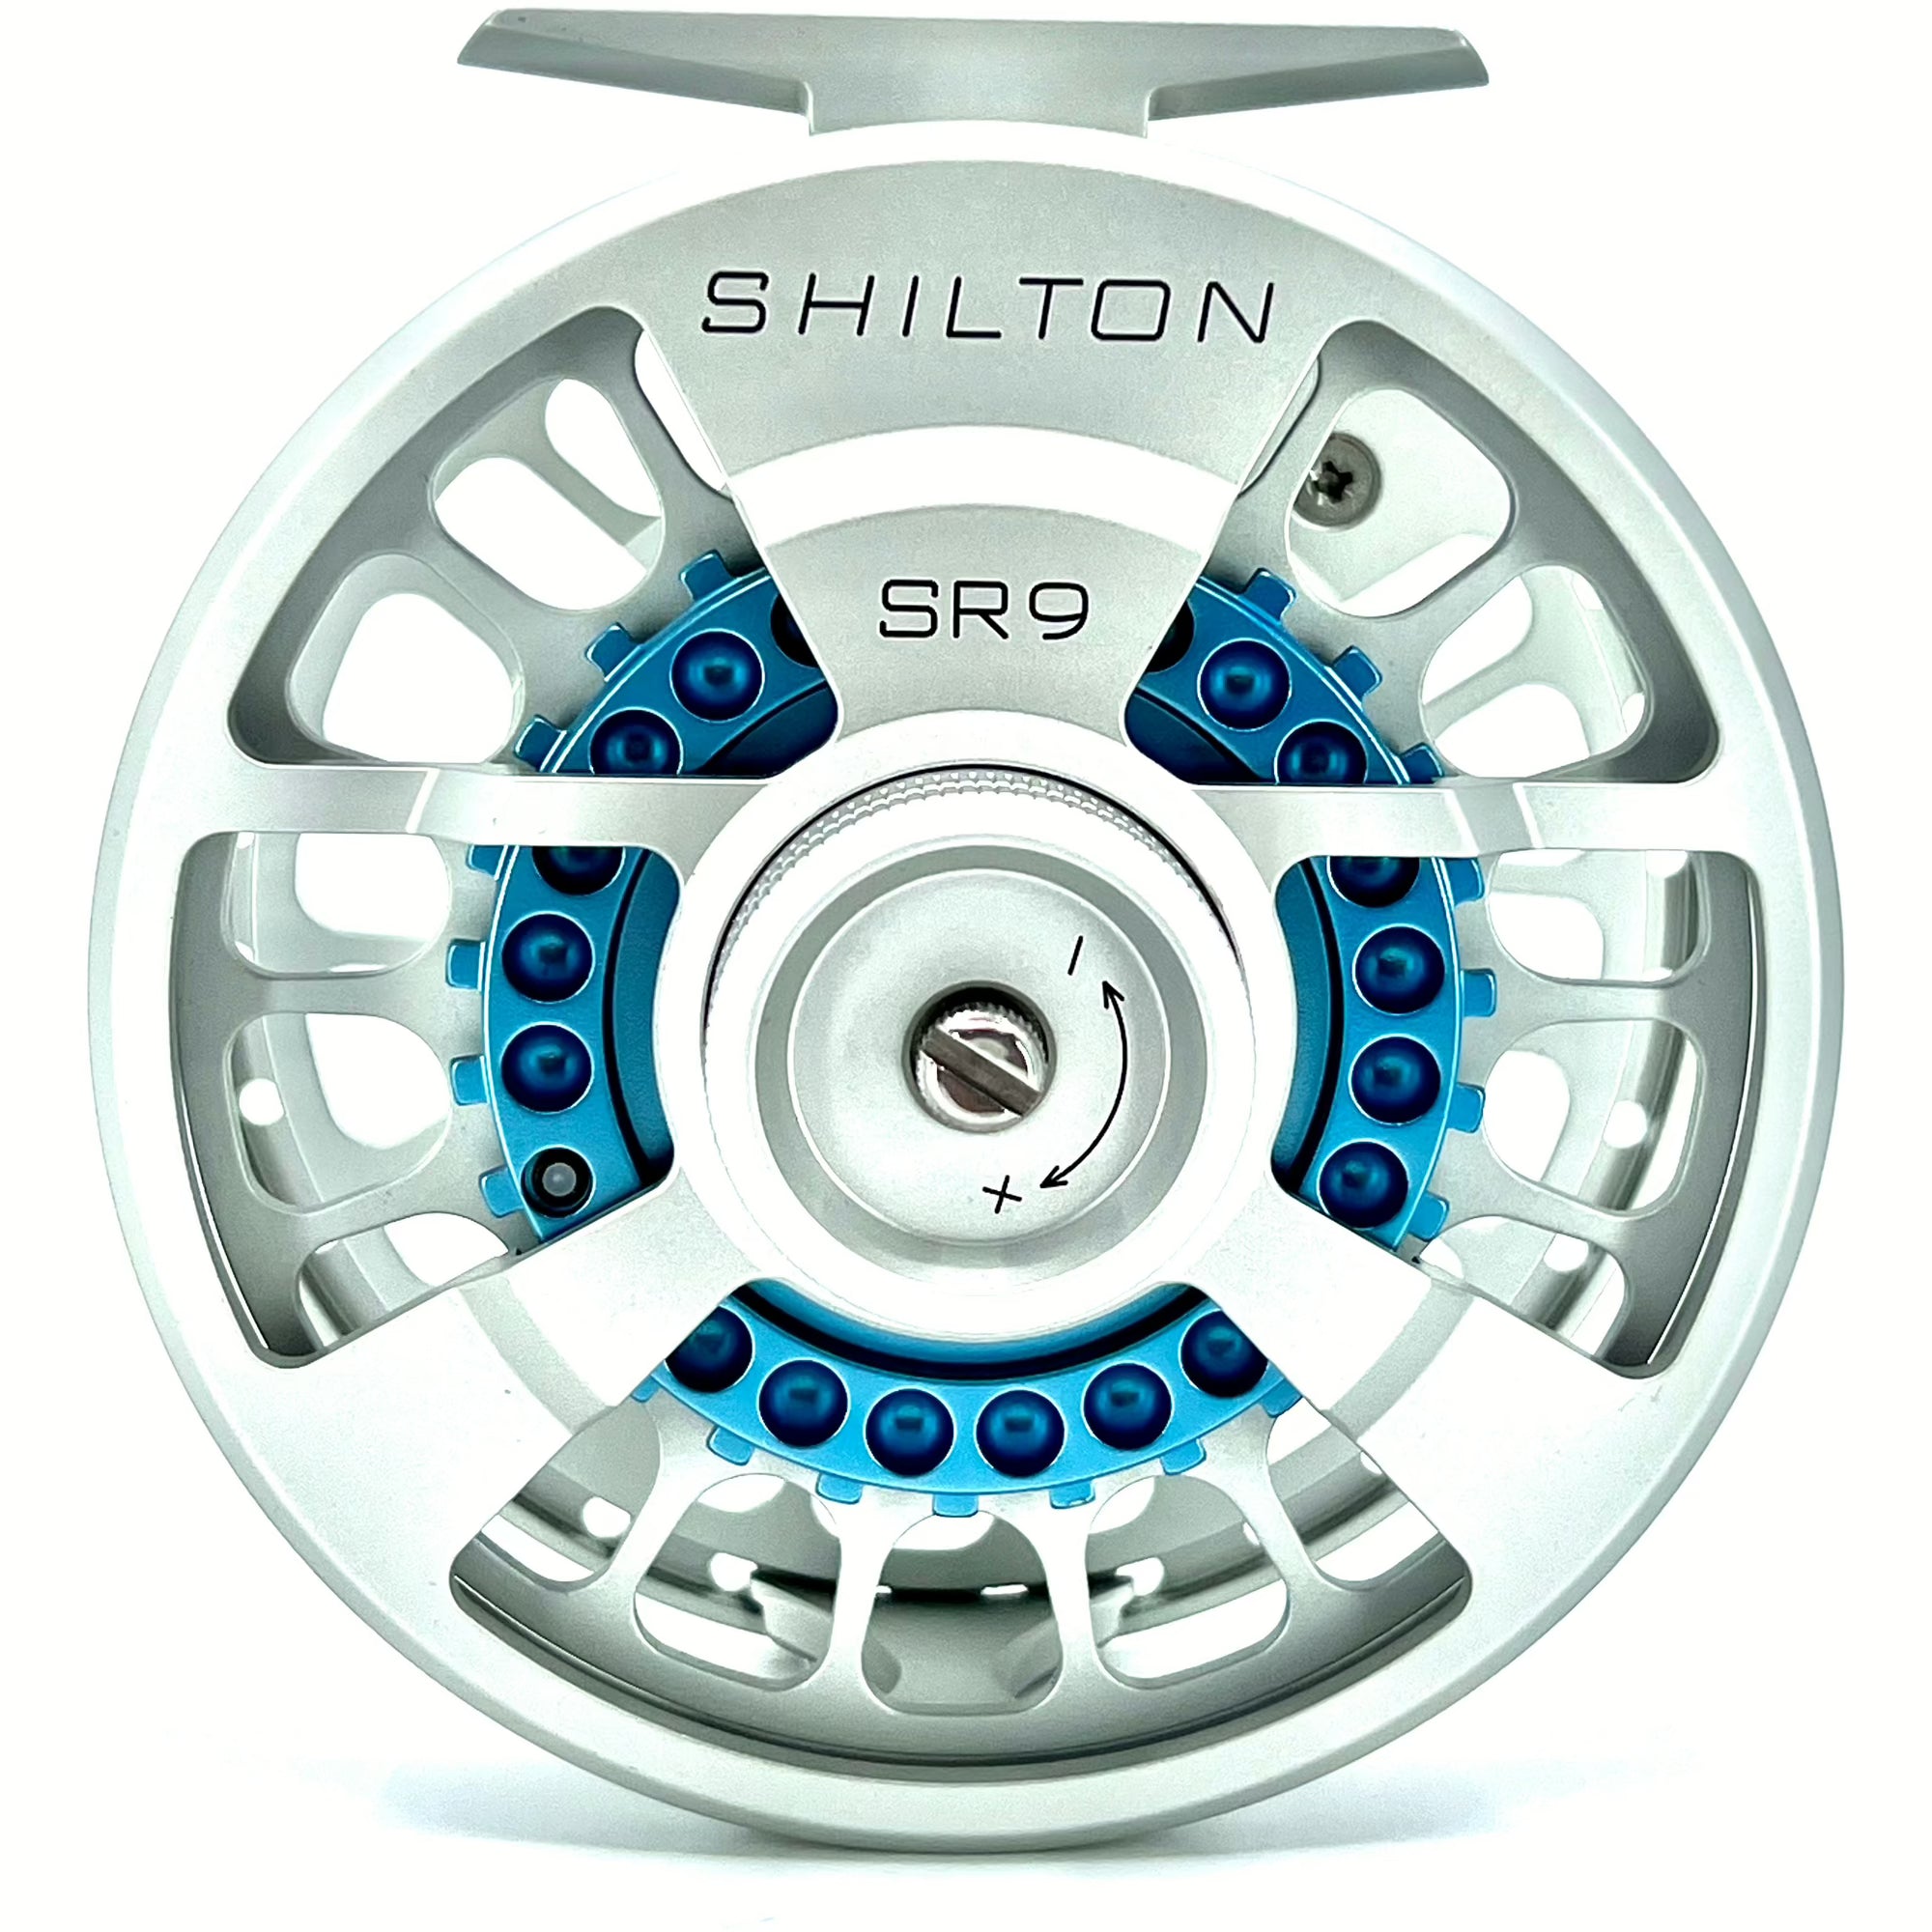 Shilton SR 9 - Titanium With Turquoise Drag Disc (Custom)